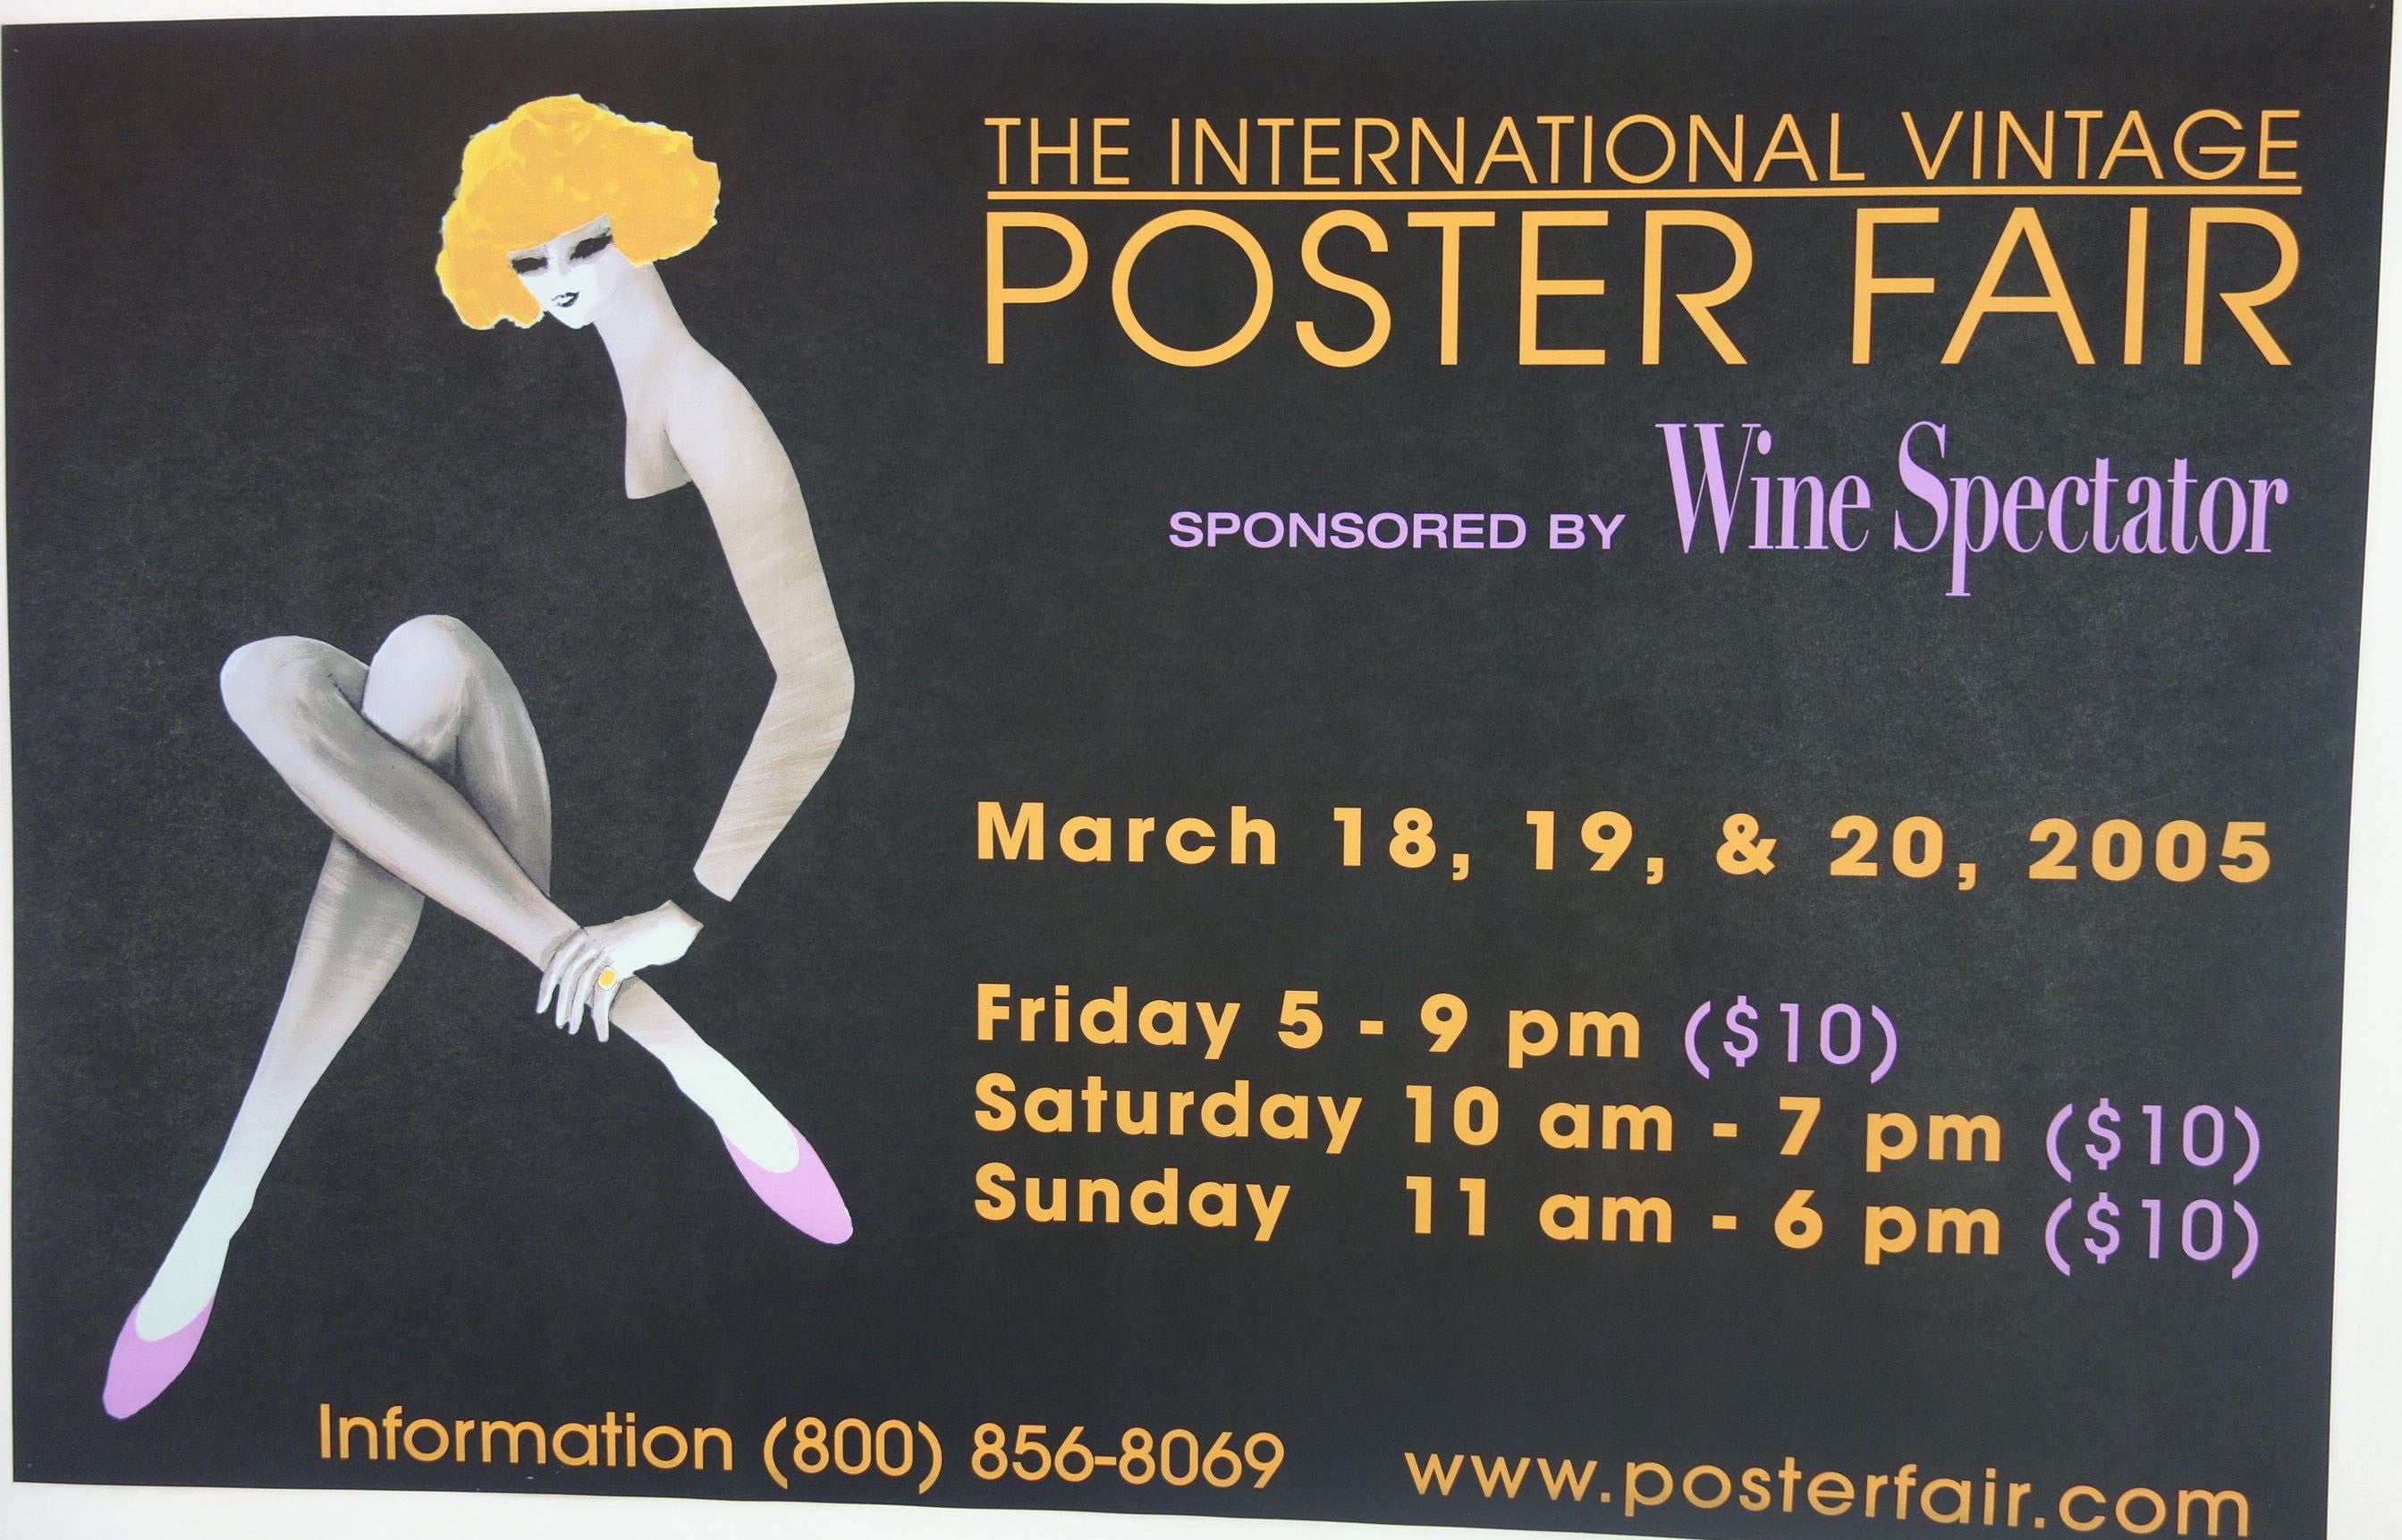 The international vintage poster fair